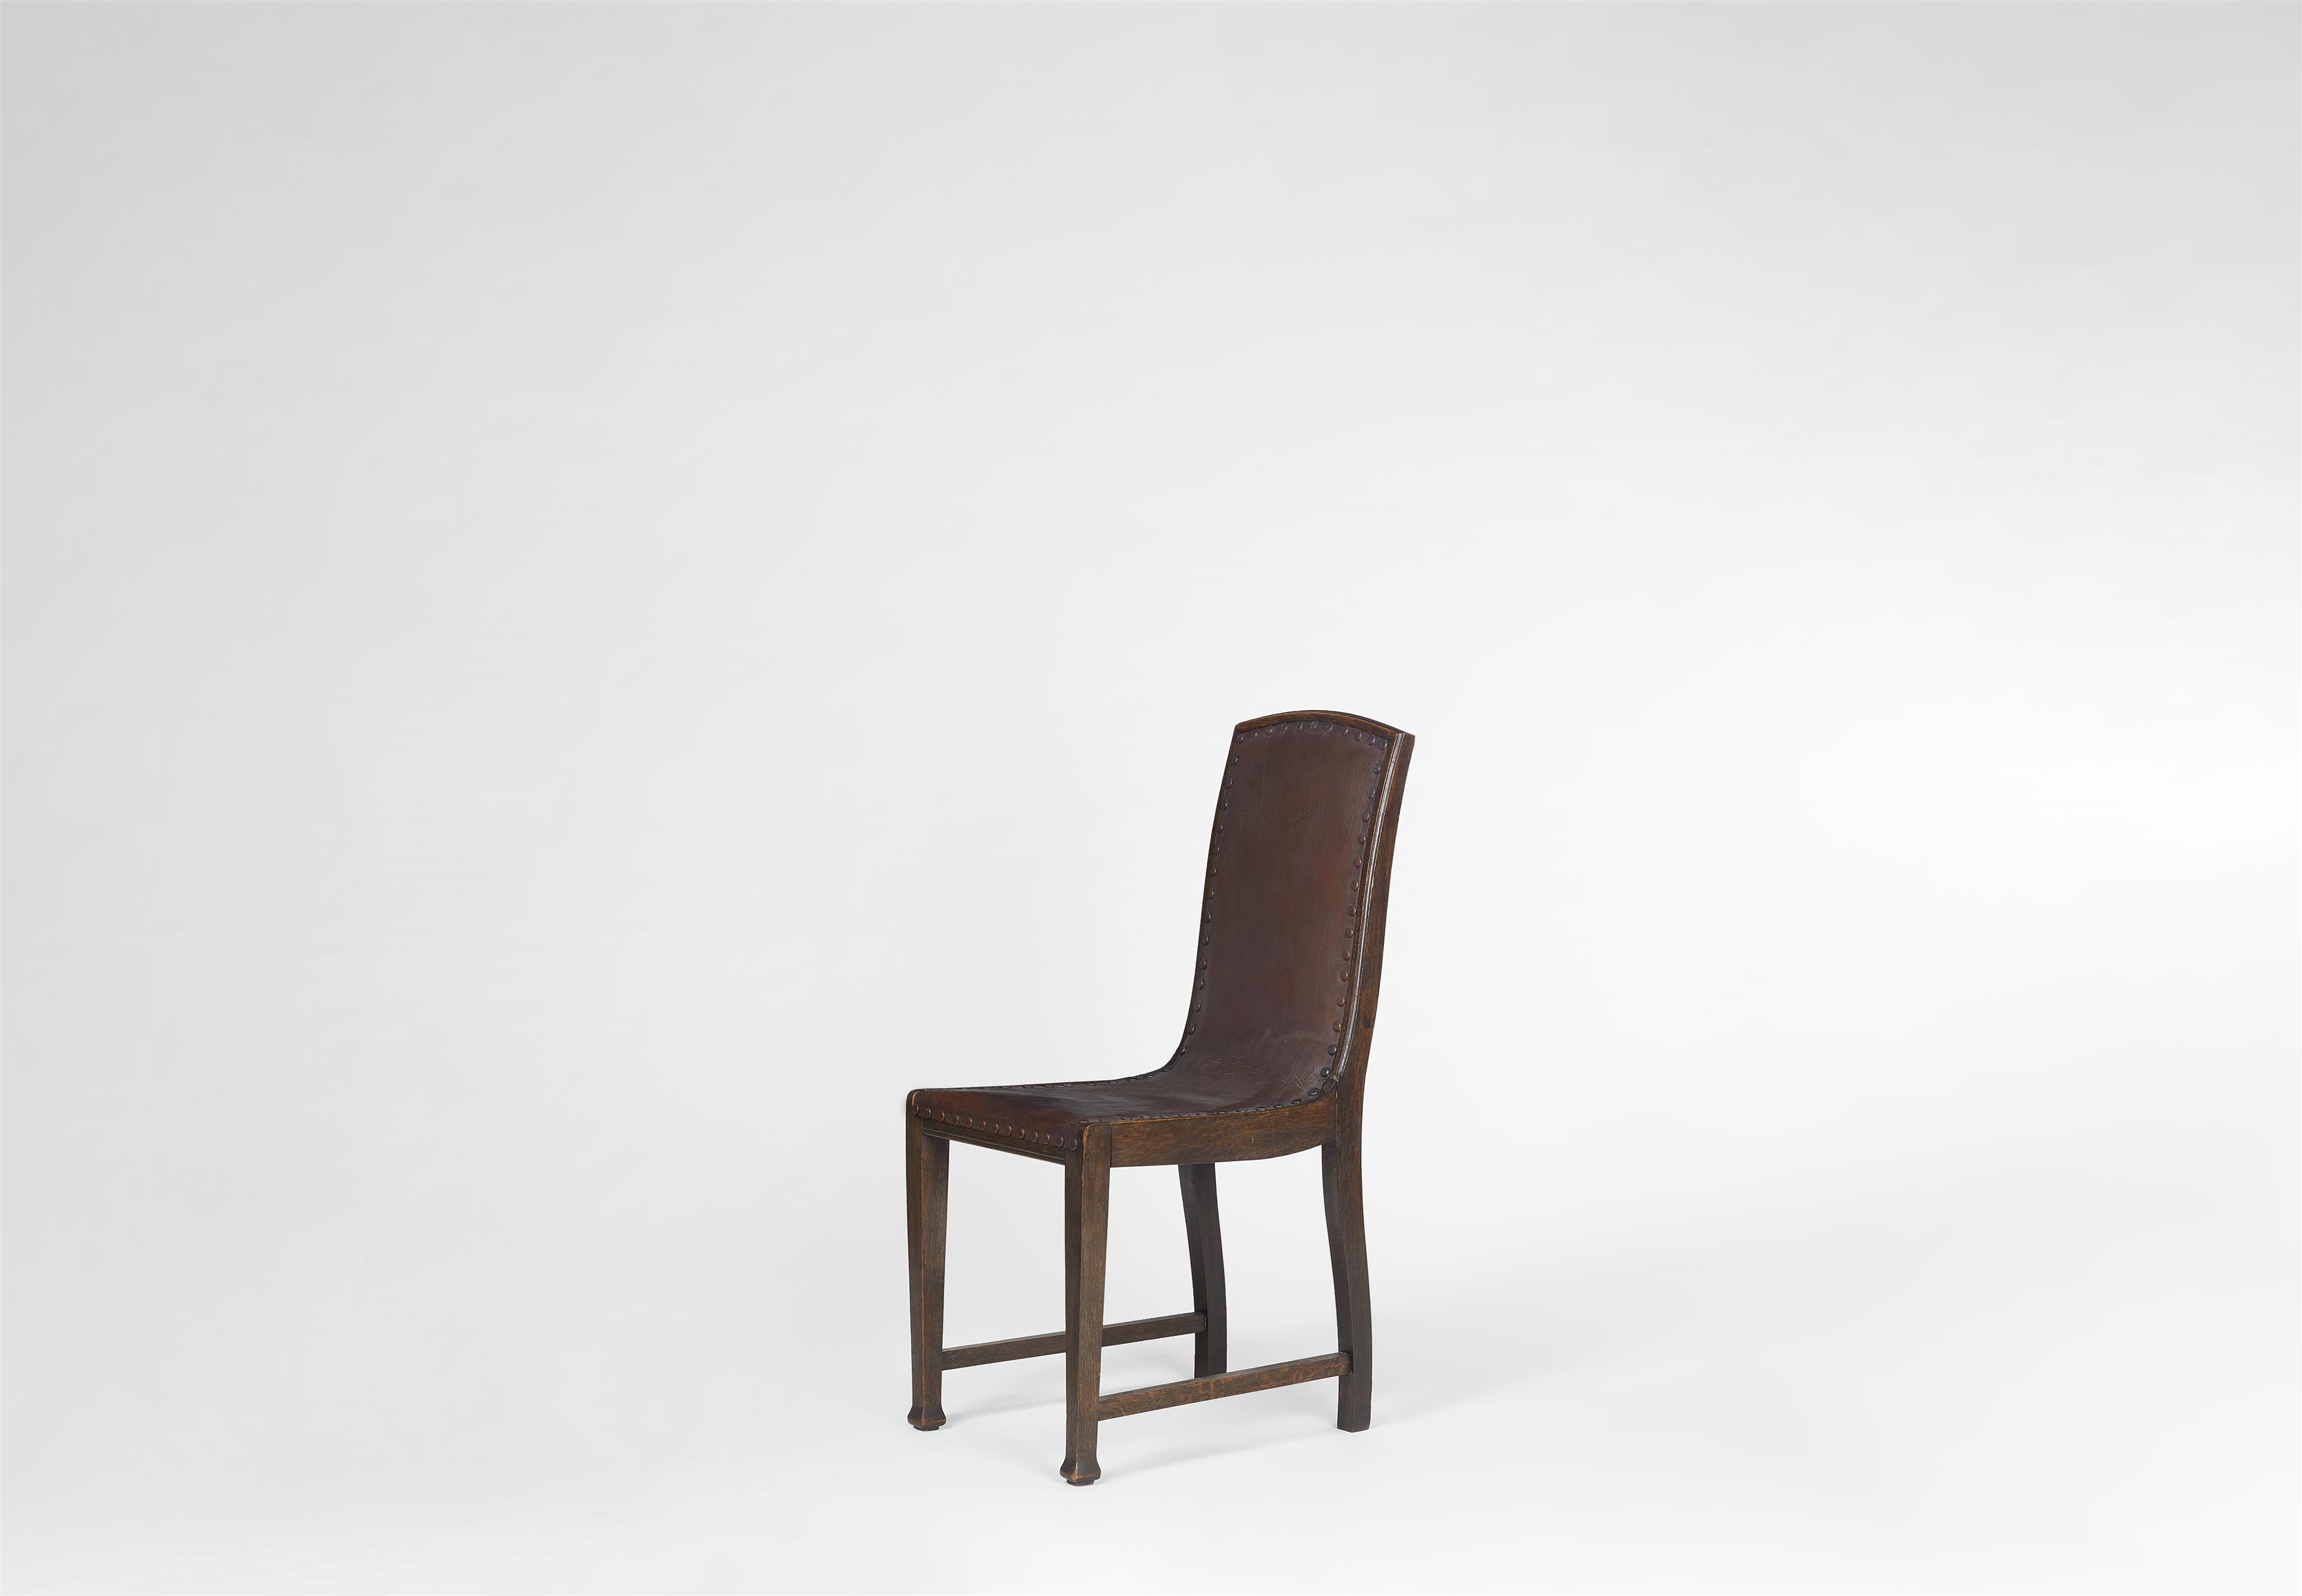 Chair by Lawrenz & Co. Berlin - image-1